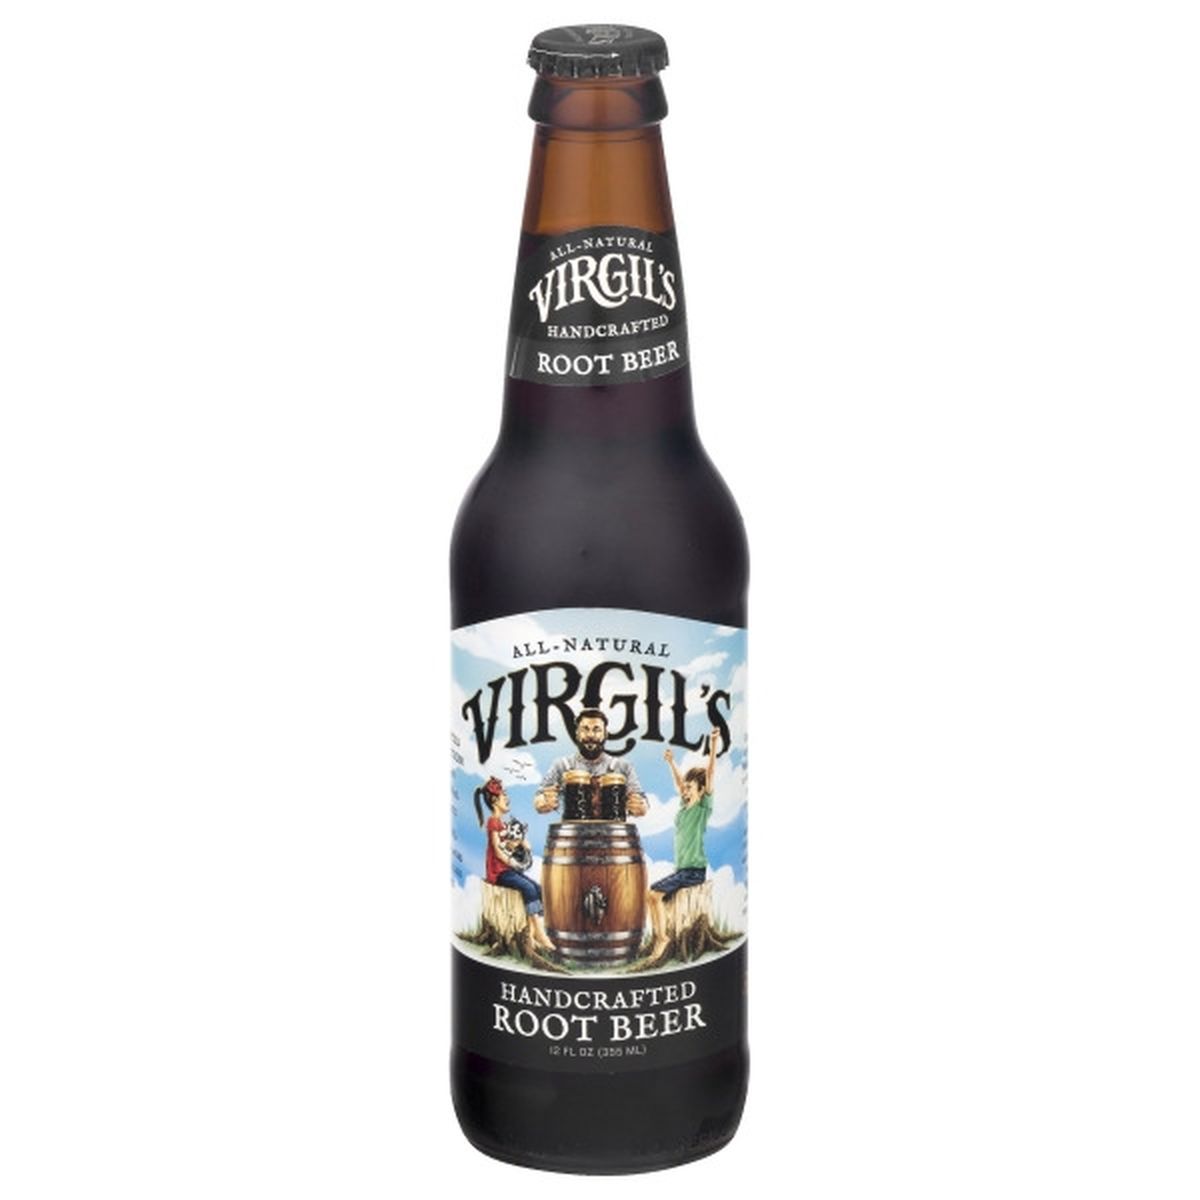 Calories in Virgil's Root Beer, Handcrafted